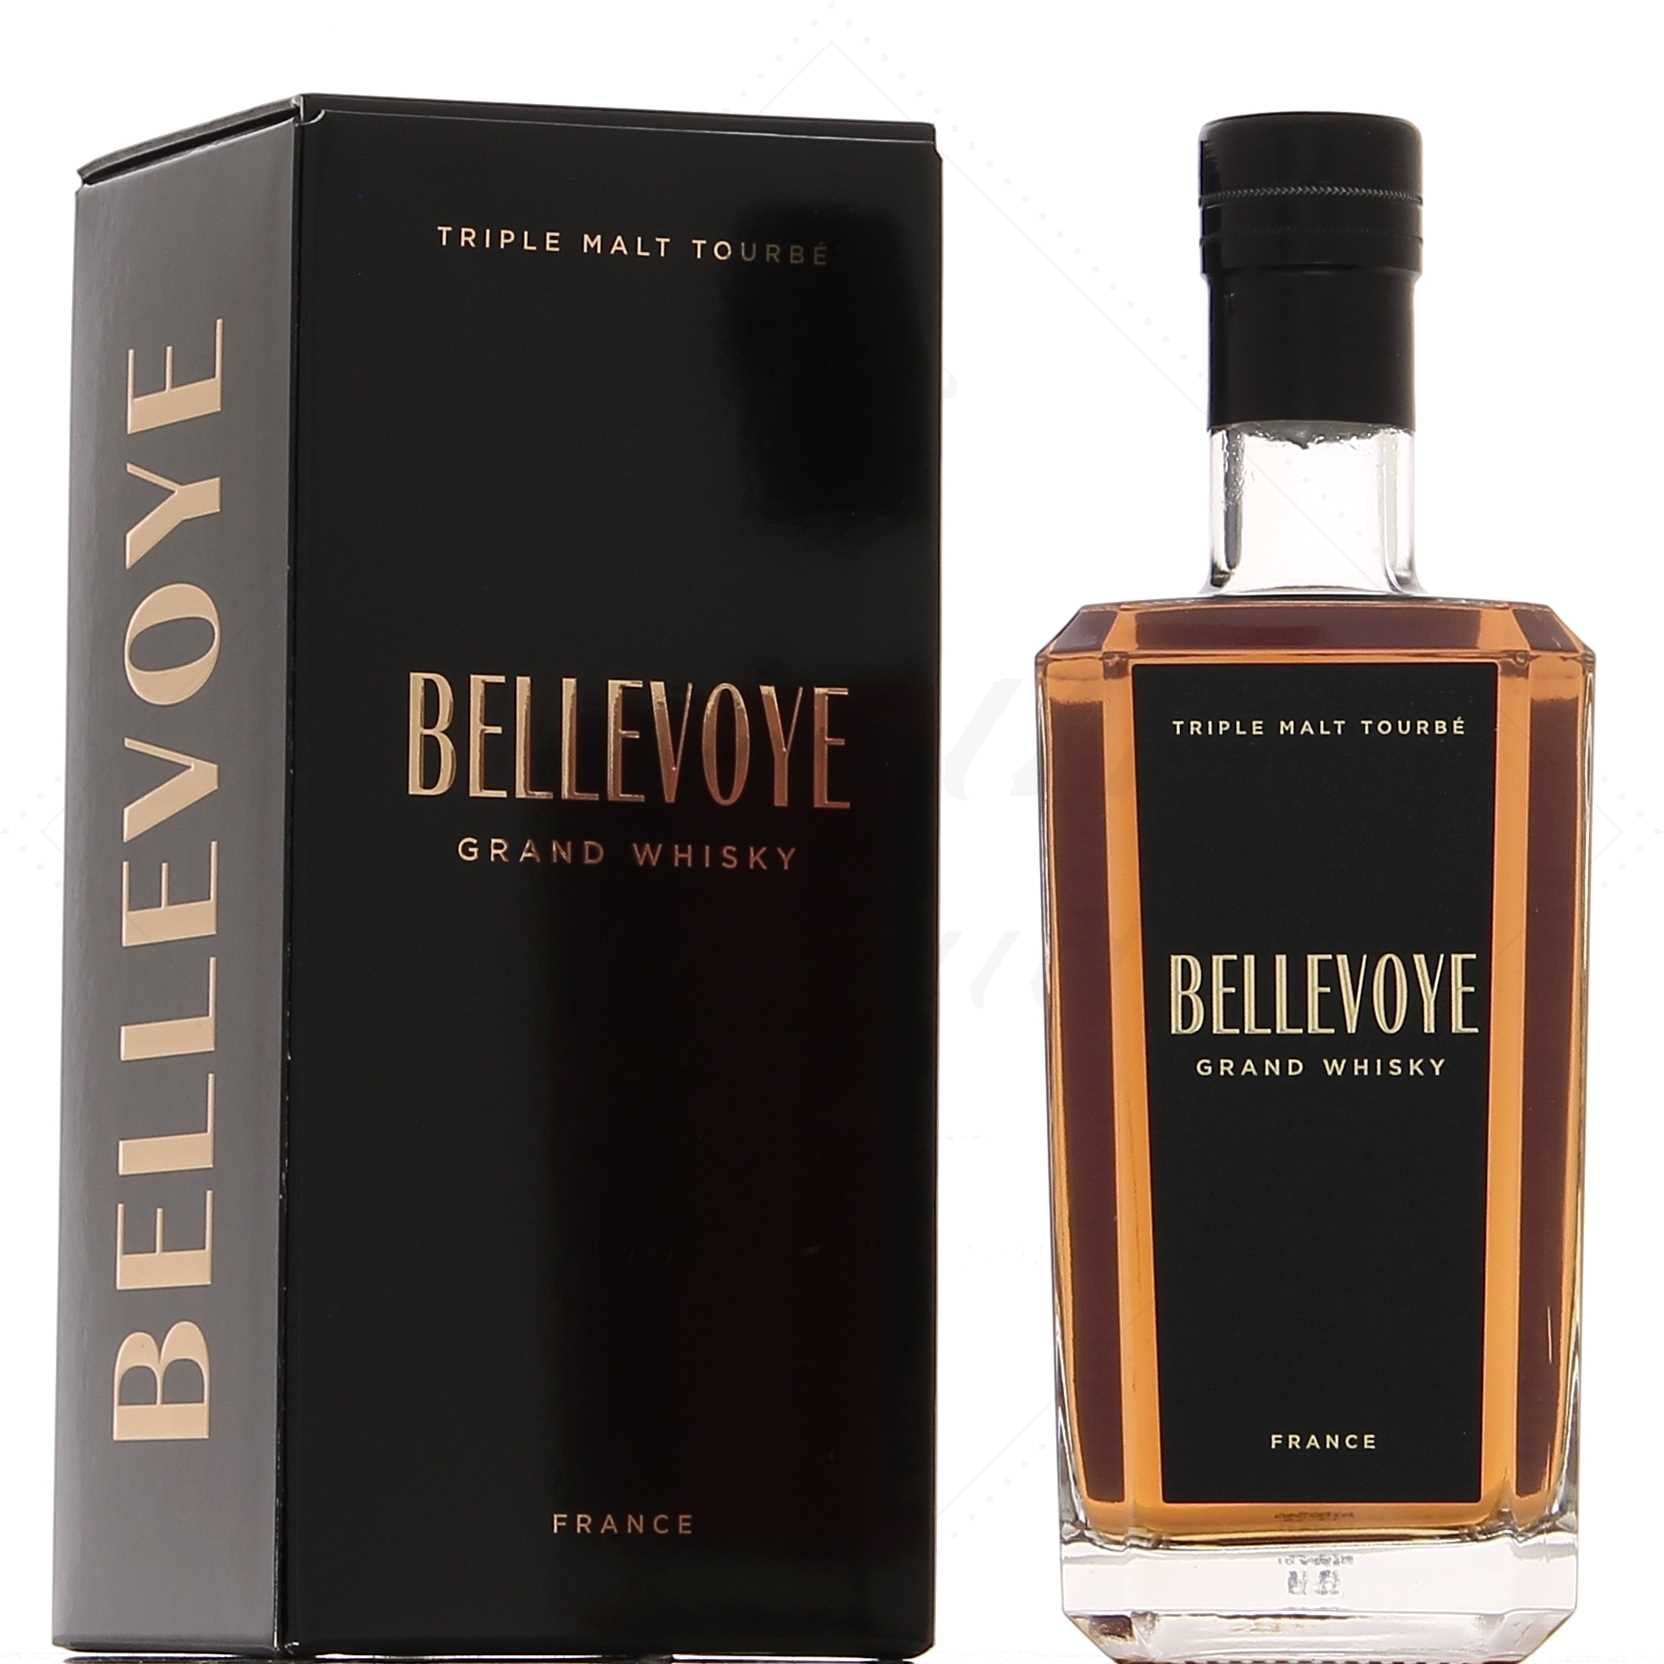 Bellevoye - Whisky - Coffret noir Prestige 3 x 20cl - 60cl - 43°